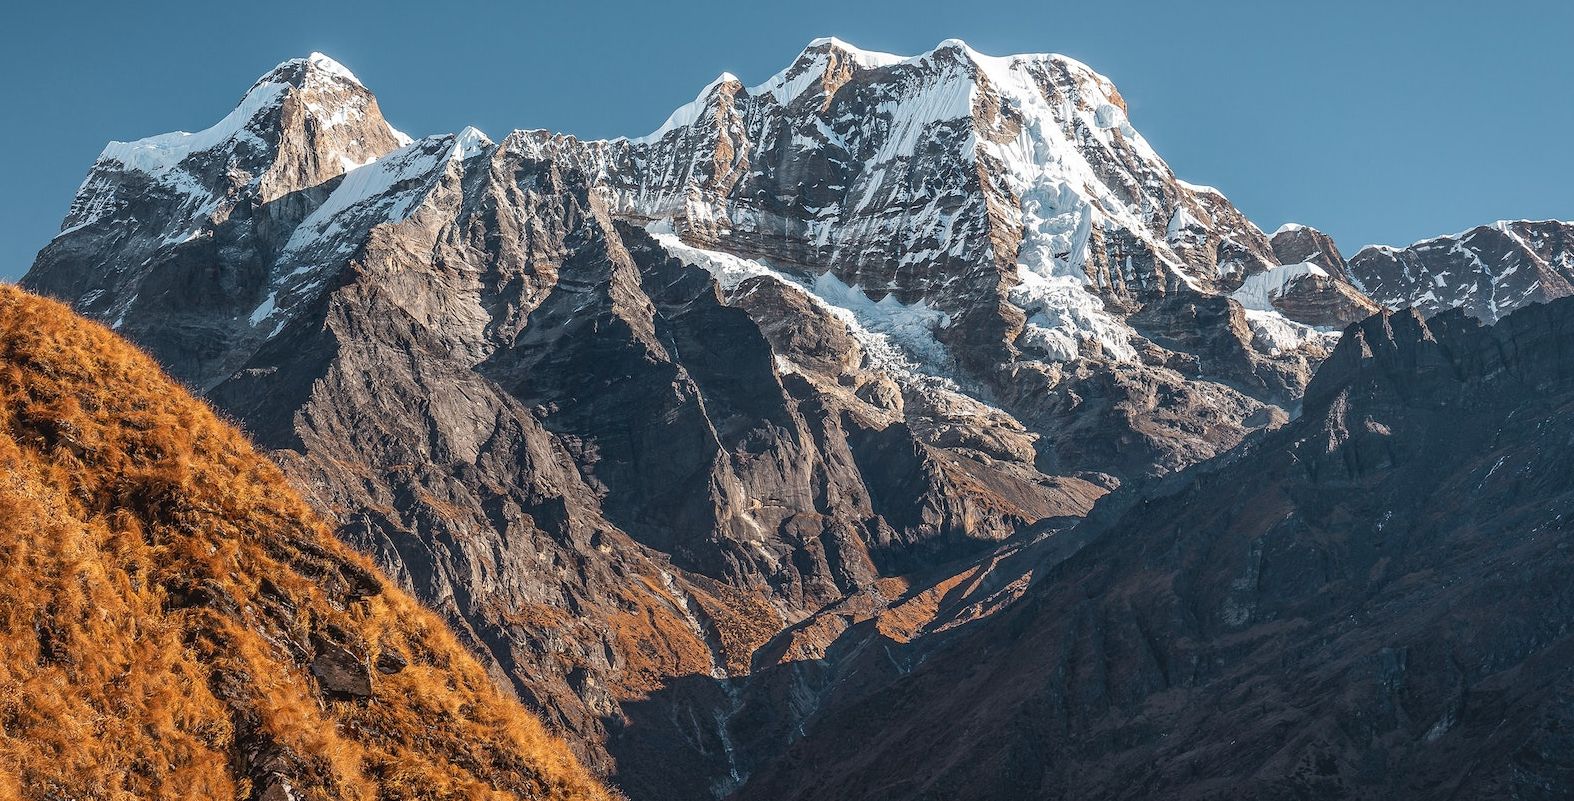 Mera Peak on descent from Zatrwa La into the Hinku Valley in the Nepal Himalaya